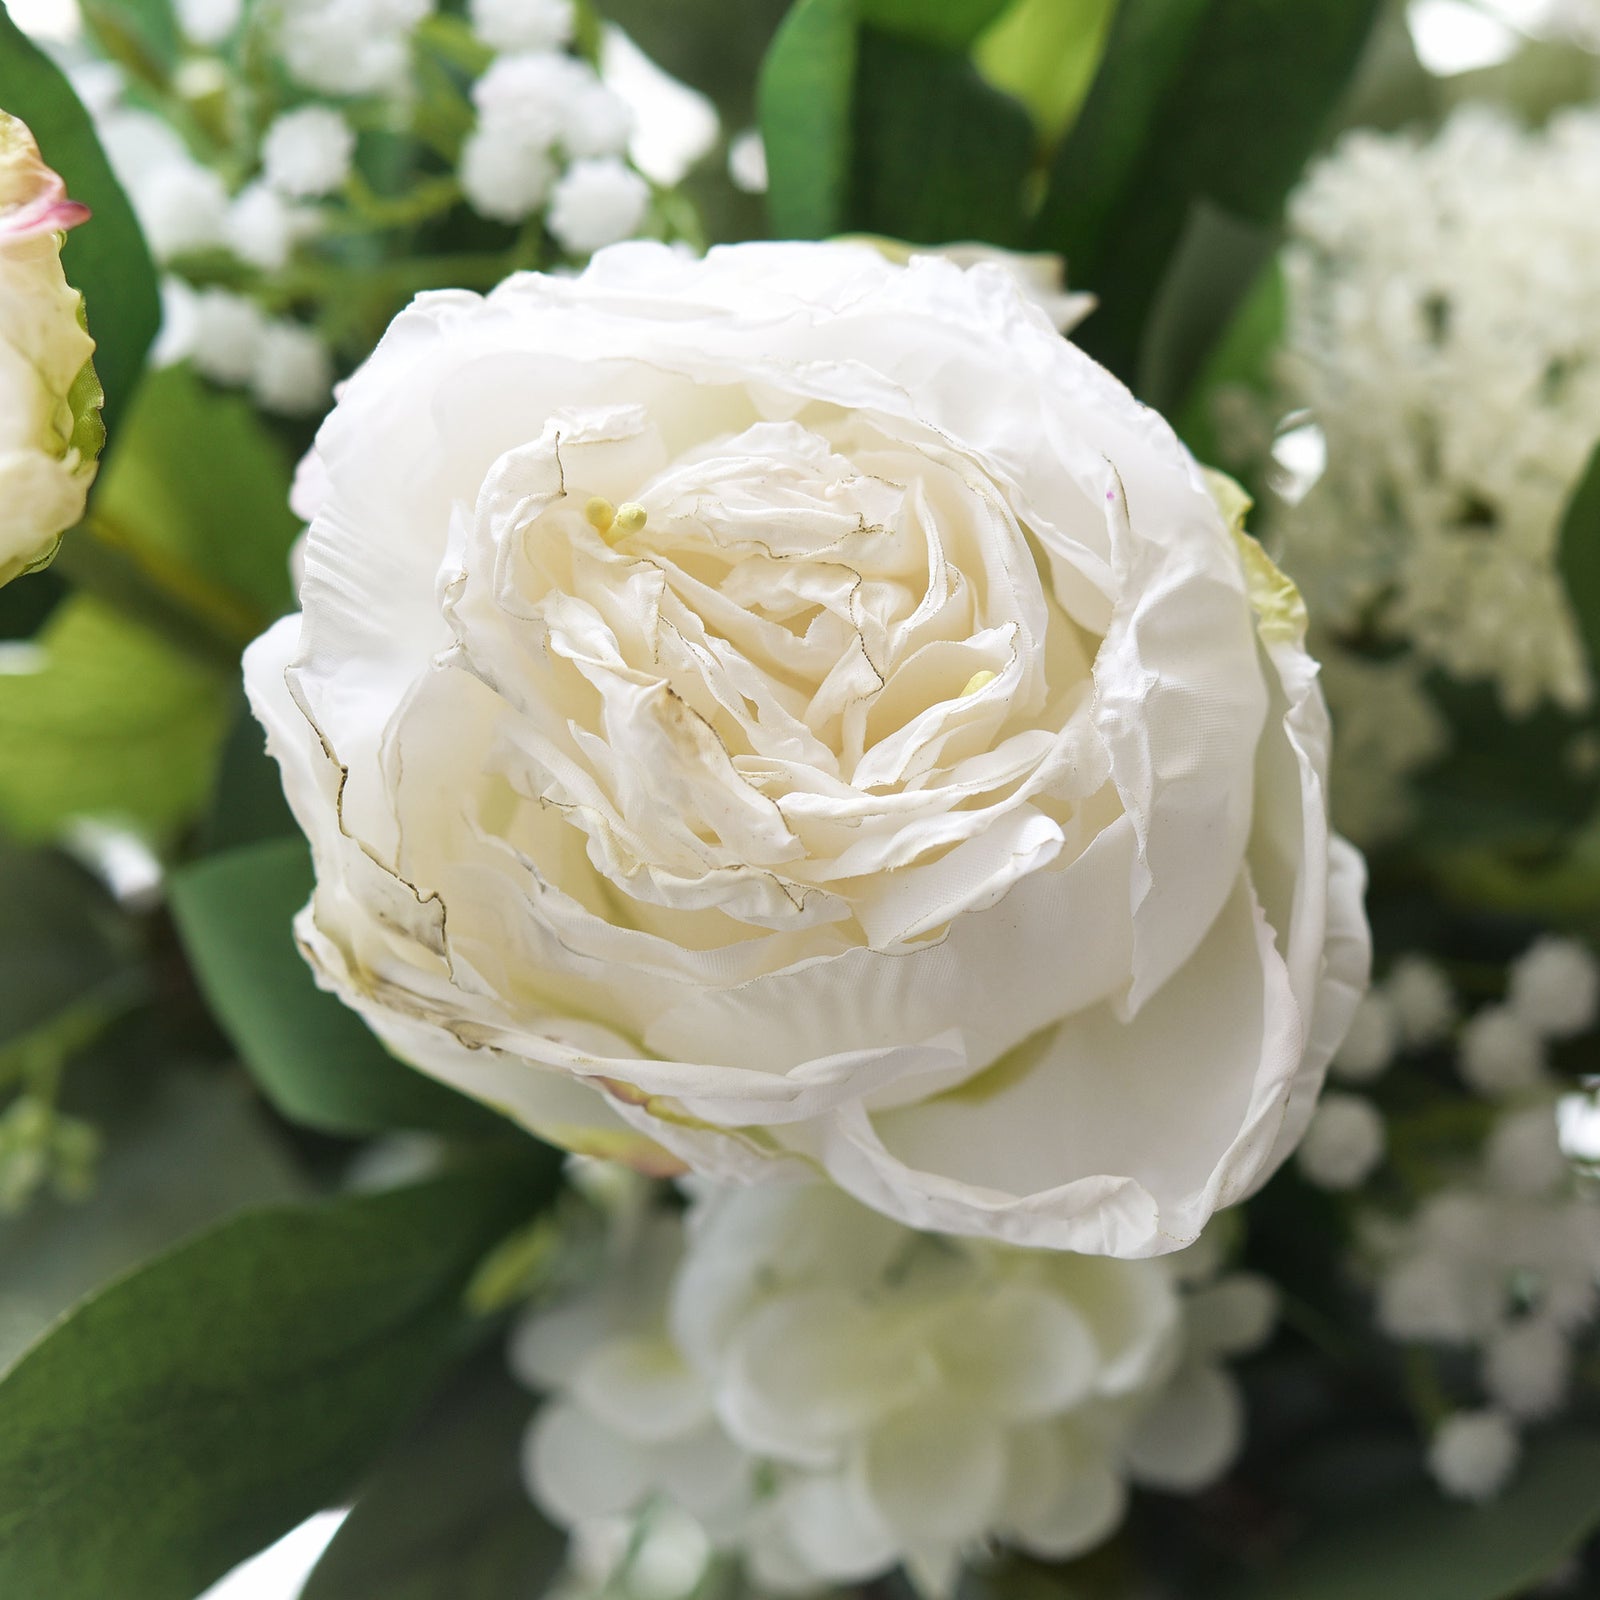 Antique White Nostalgic Sentimental Rustic Vintage Silk Peony Artificial Flower Bouquet 6 Stems - FiveSeasonStuff Floral